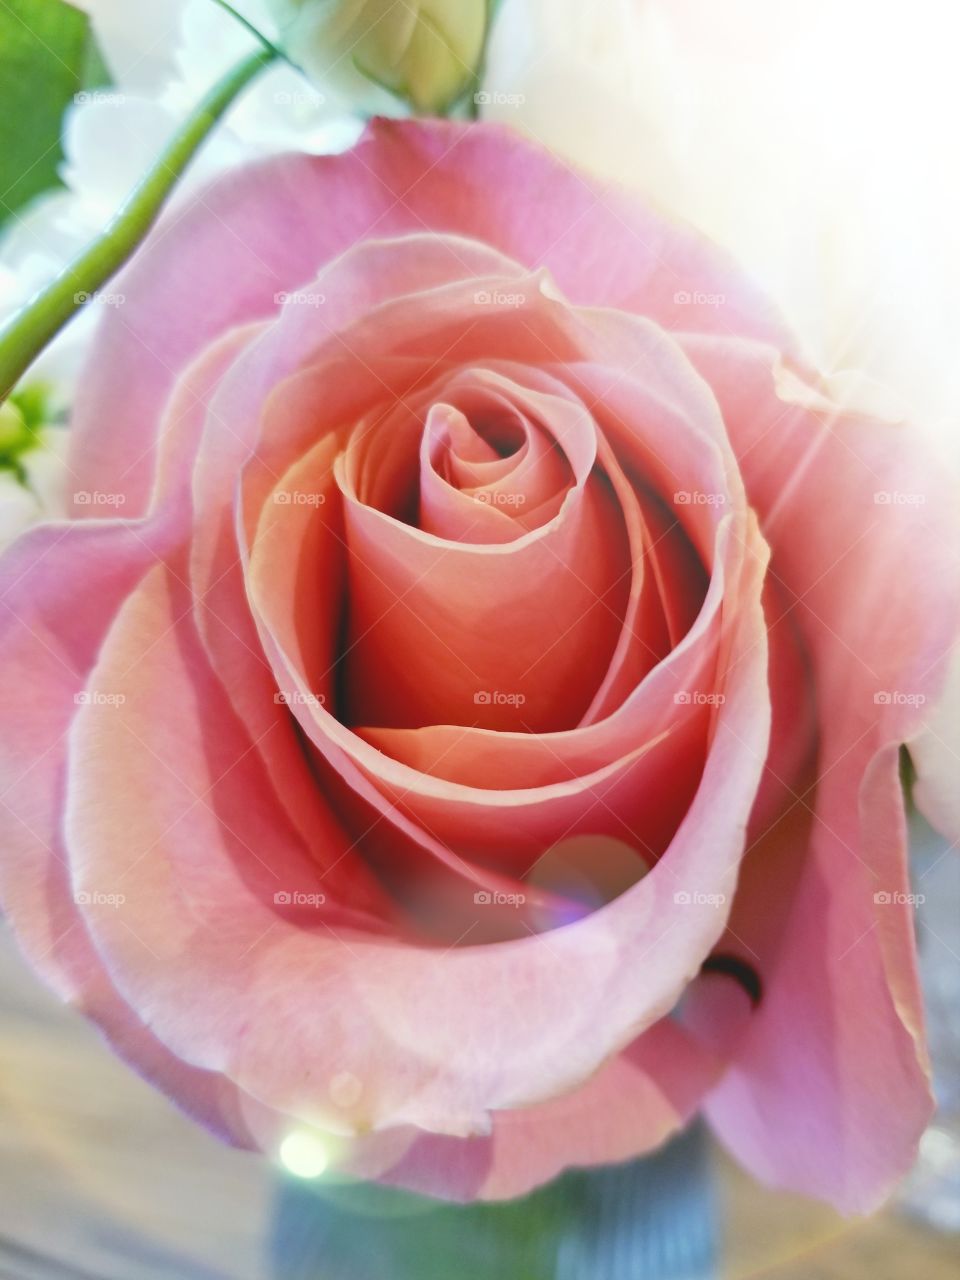 rosy rose